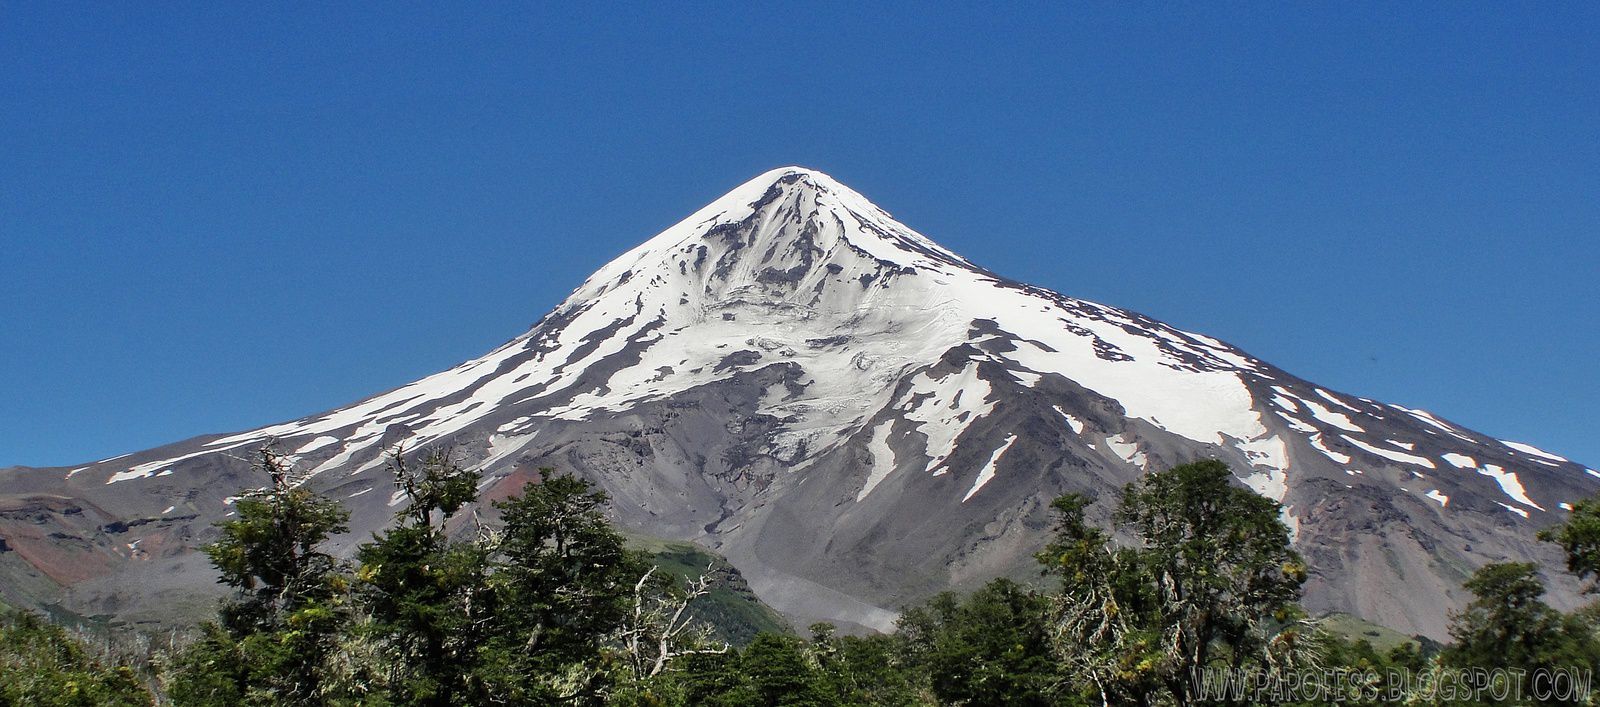 Lanin volcano - photo Pedro Hauck / Summitpost.